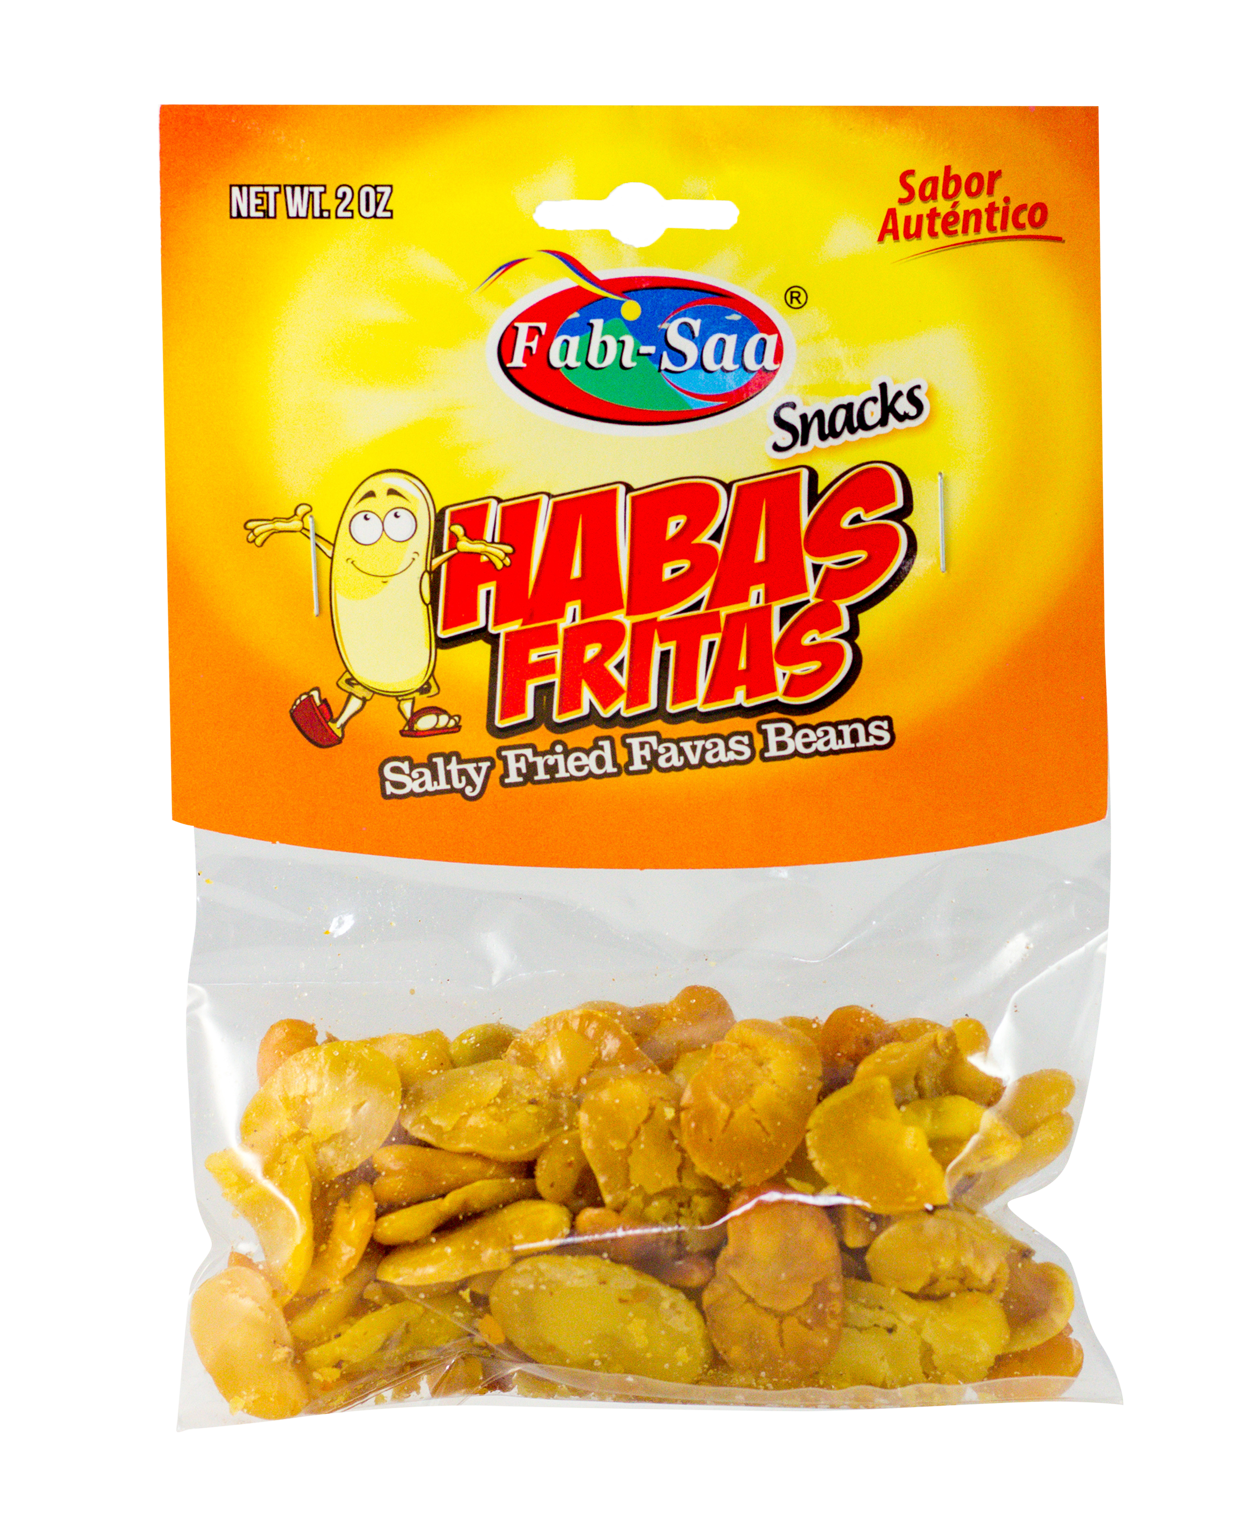 Habitas Fritas -2 oz-Fabi Saa Online Sales LLC